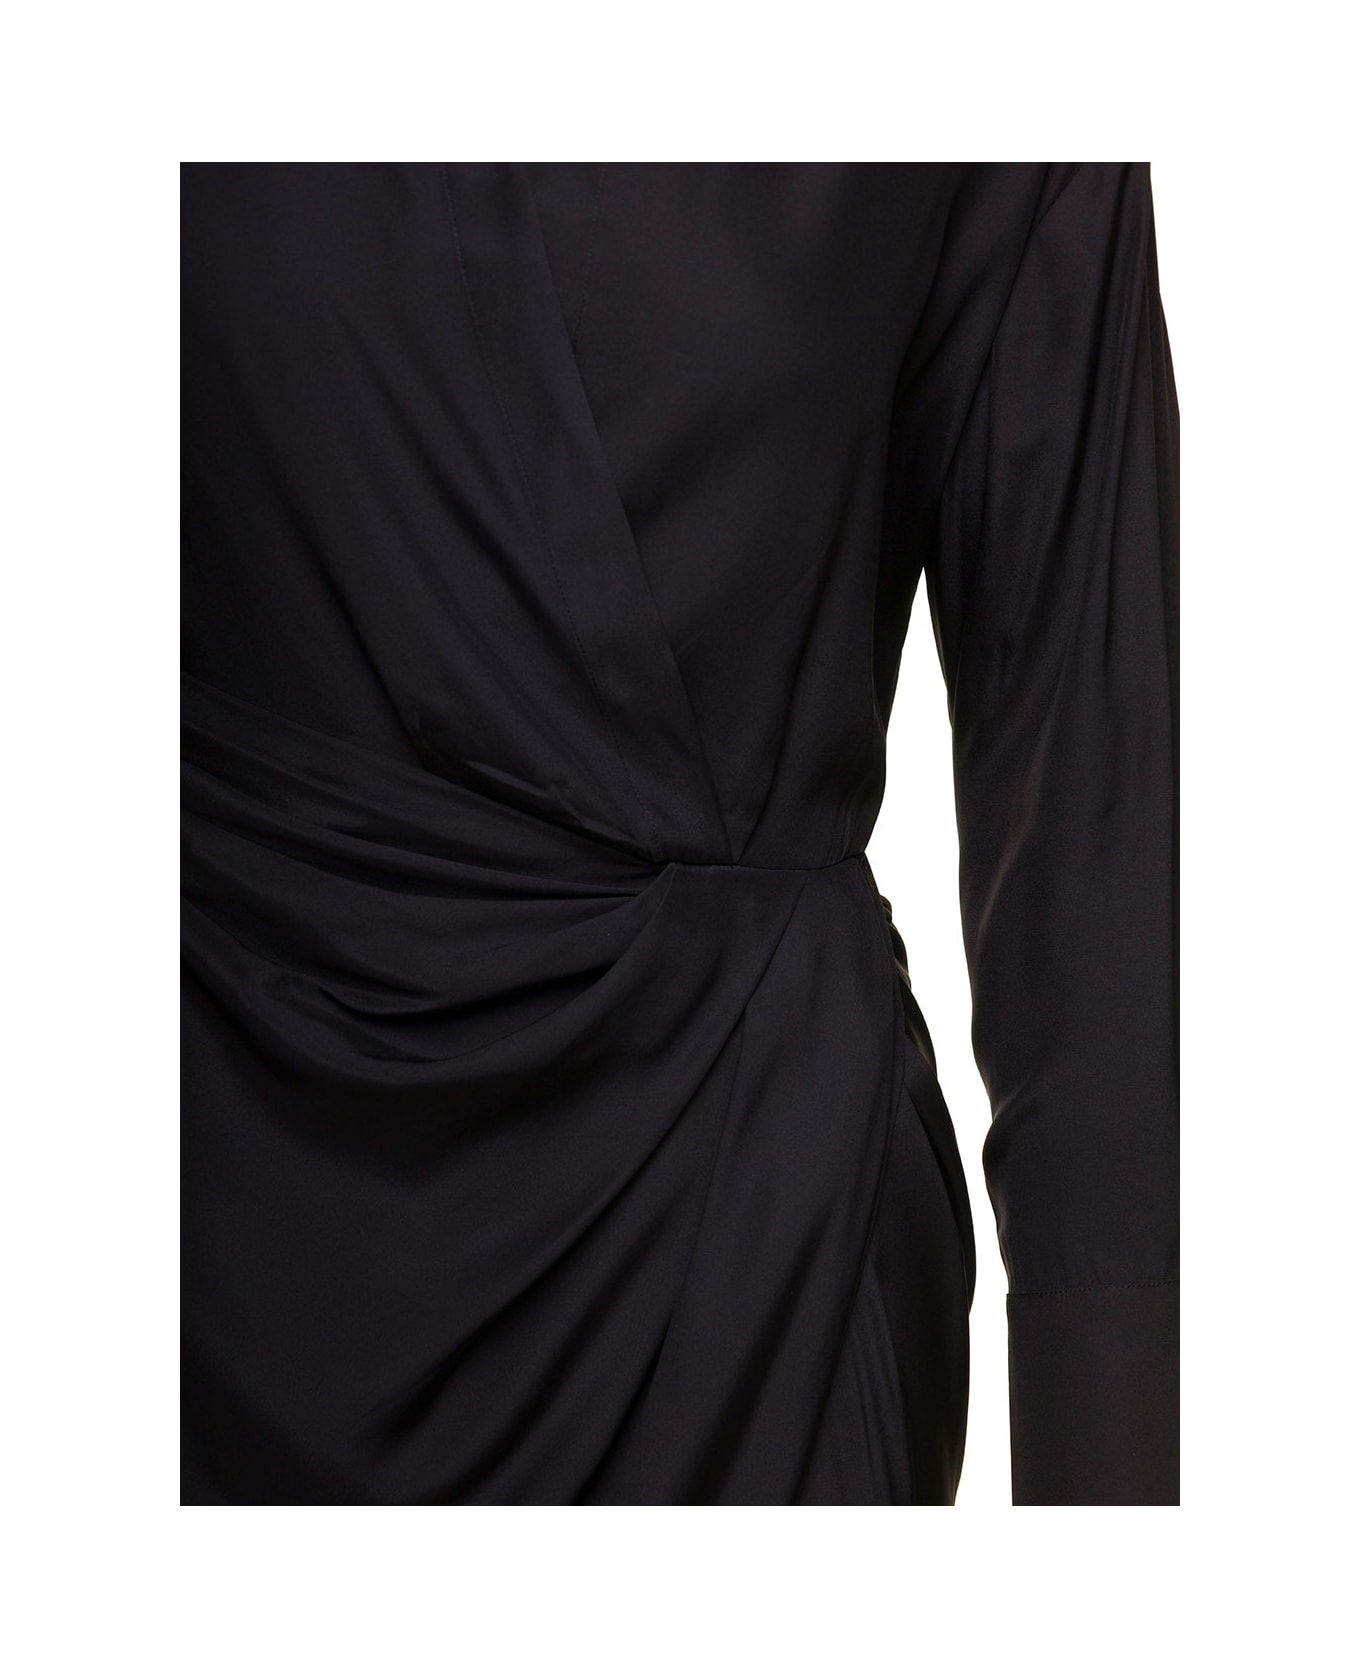 GAUGE81 Black Gathered-front Shirt Dress Woman - Black